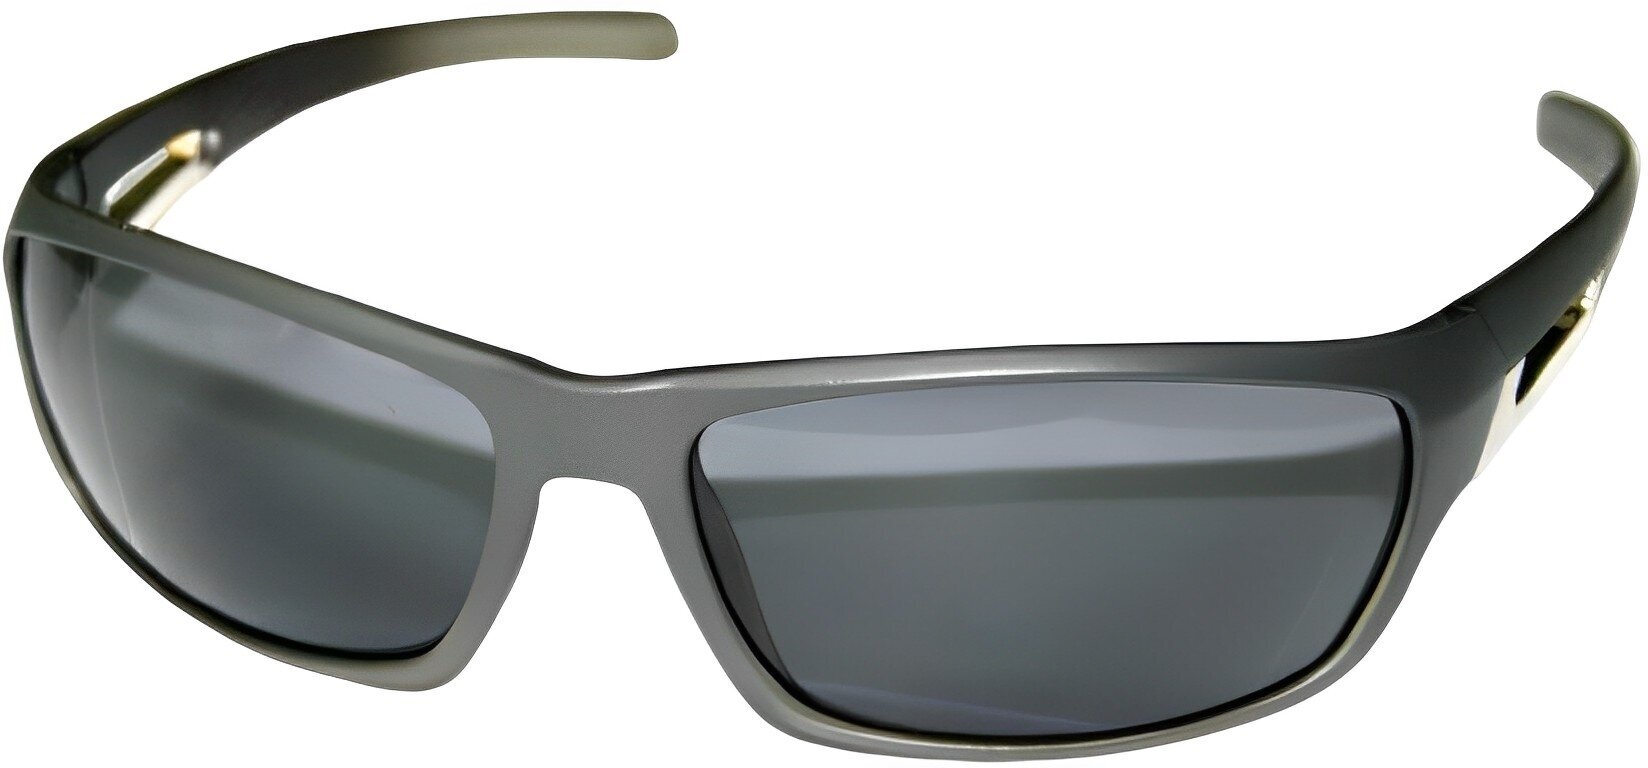 Yachting očala Lalizas TR90 Polarized Grey Yachting očala